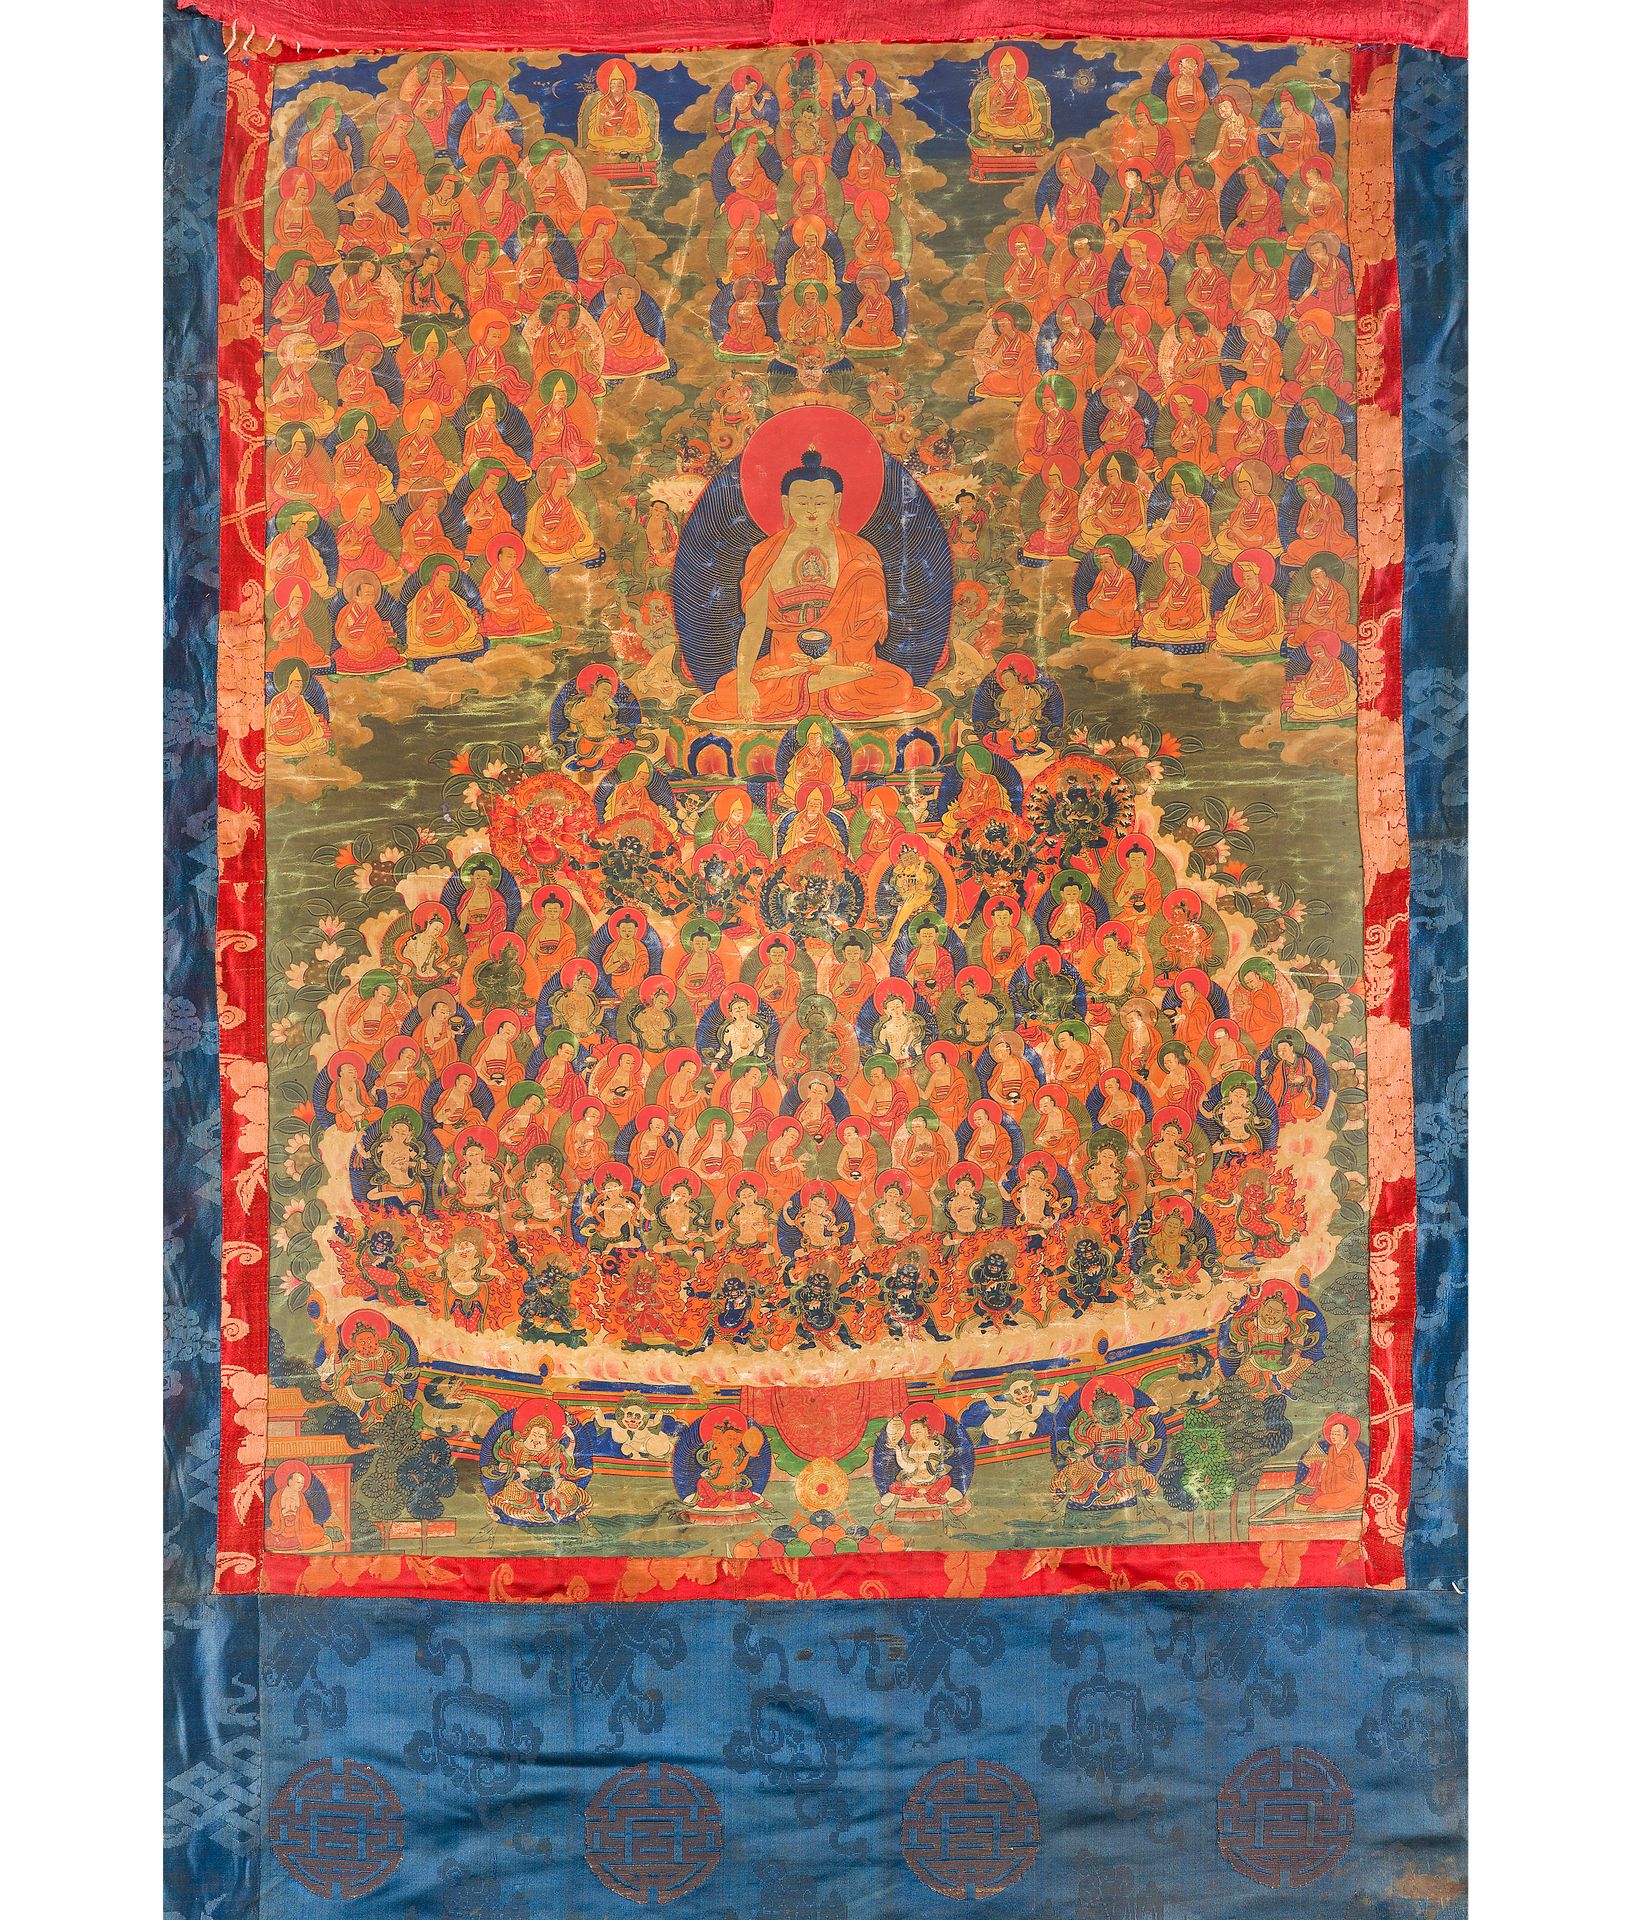 Null 来自西藏东部的一幅唐卡，表现了释迦牟尼佛的避难所。

西藏，19世纪

织物，颜料，原样

138 x 77 cm



出处 ：

纳丁-维诺-波斯&hellip;